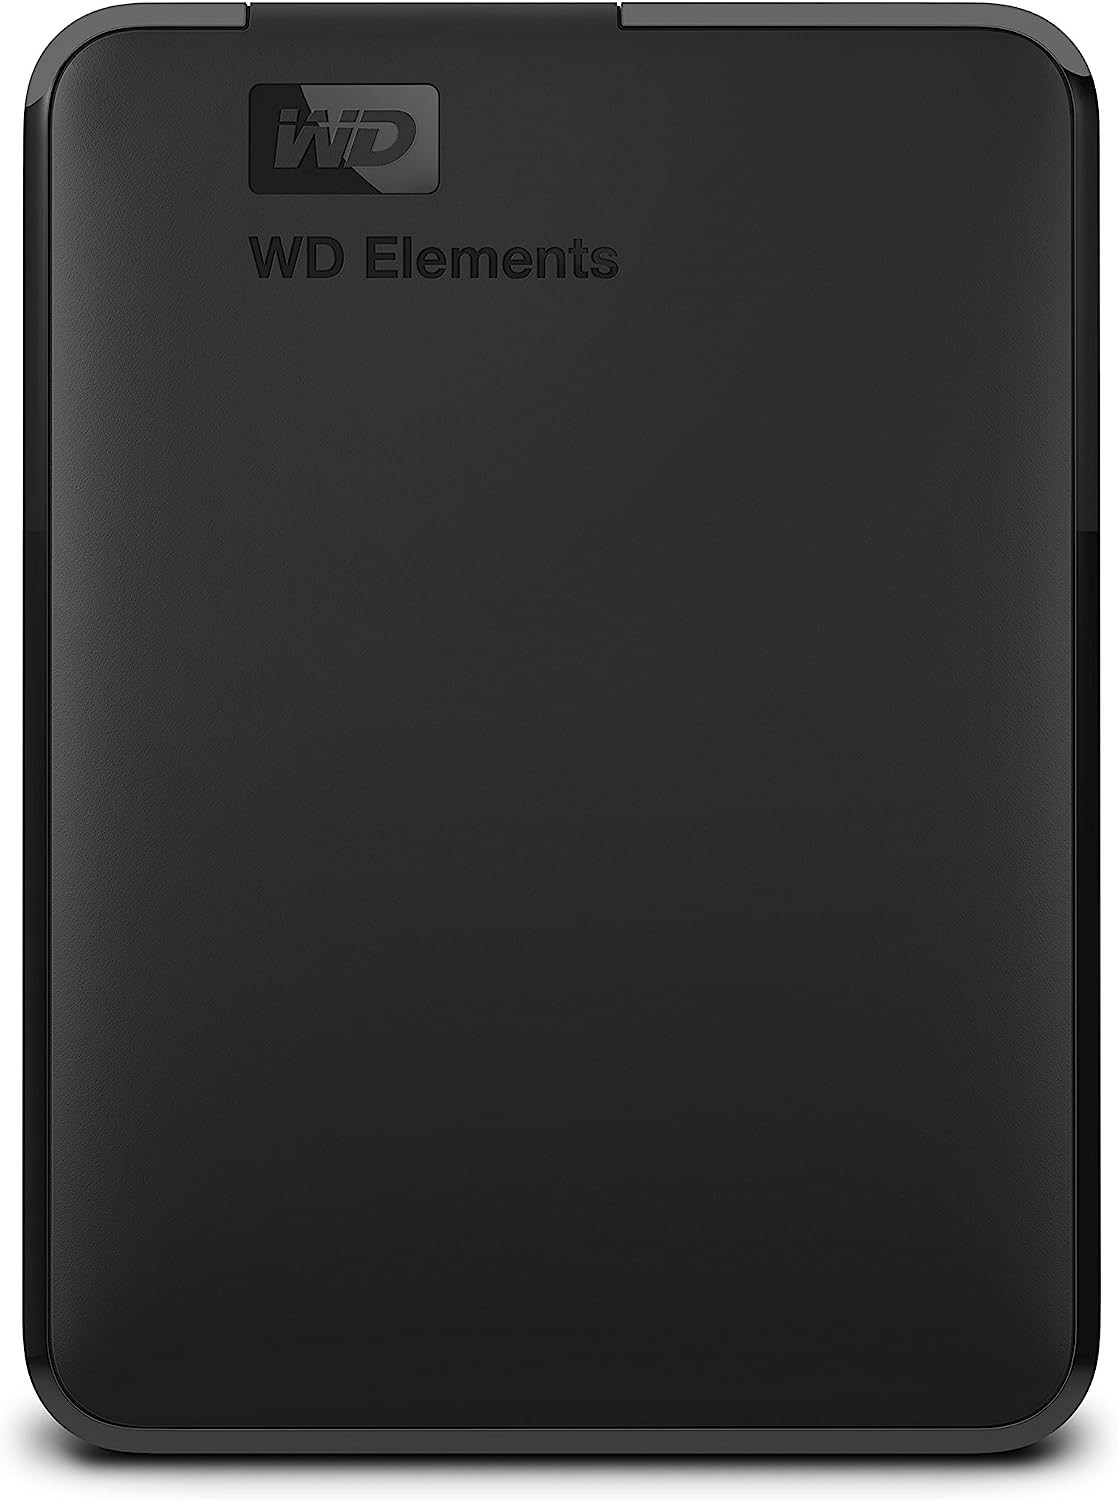 chollo WD Elements - Disco duro externo portátil de 5 TB con USB 3.0, color negro